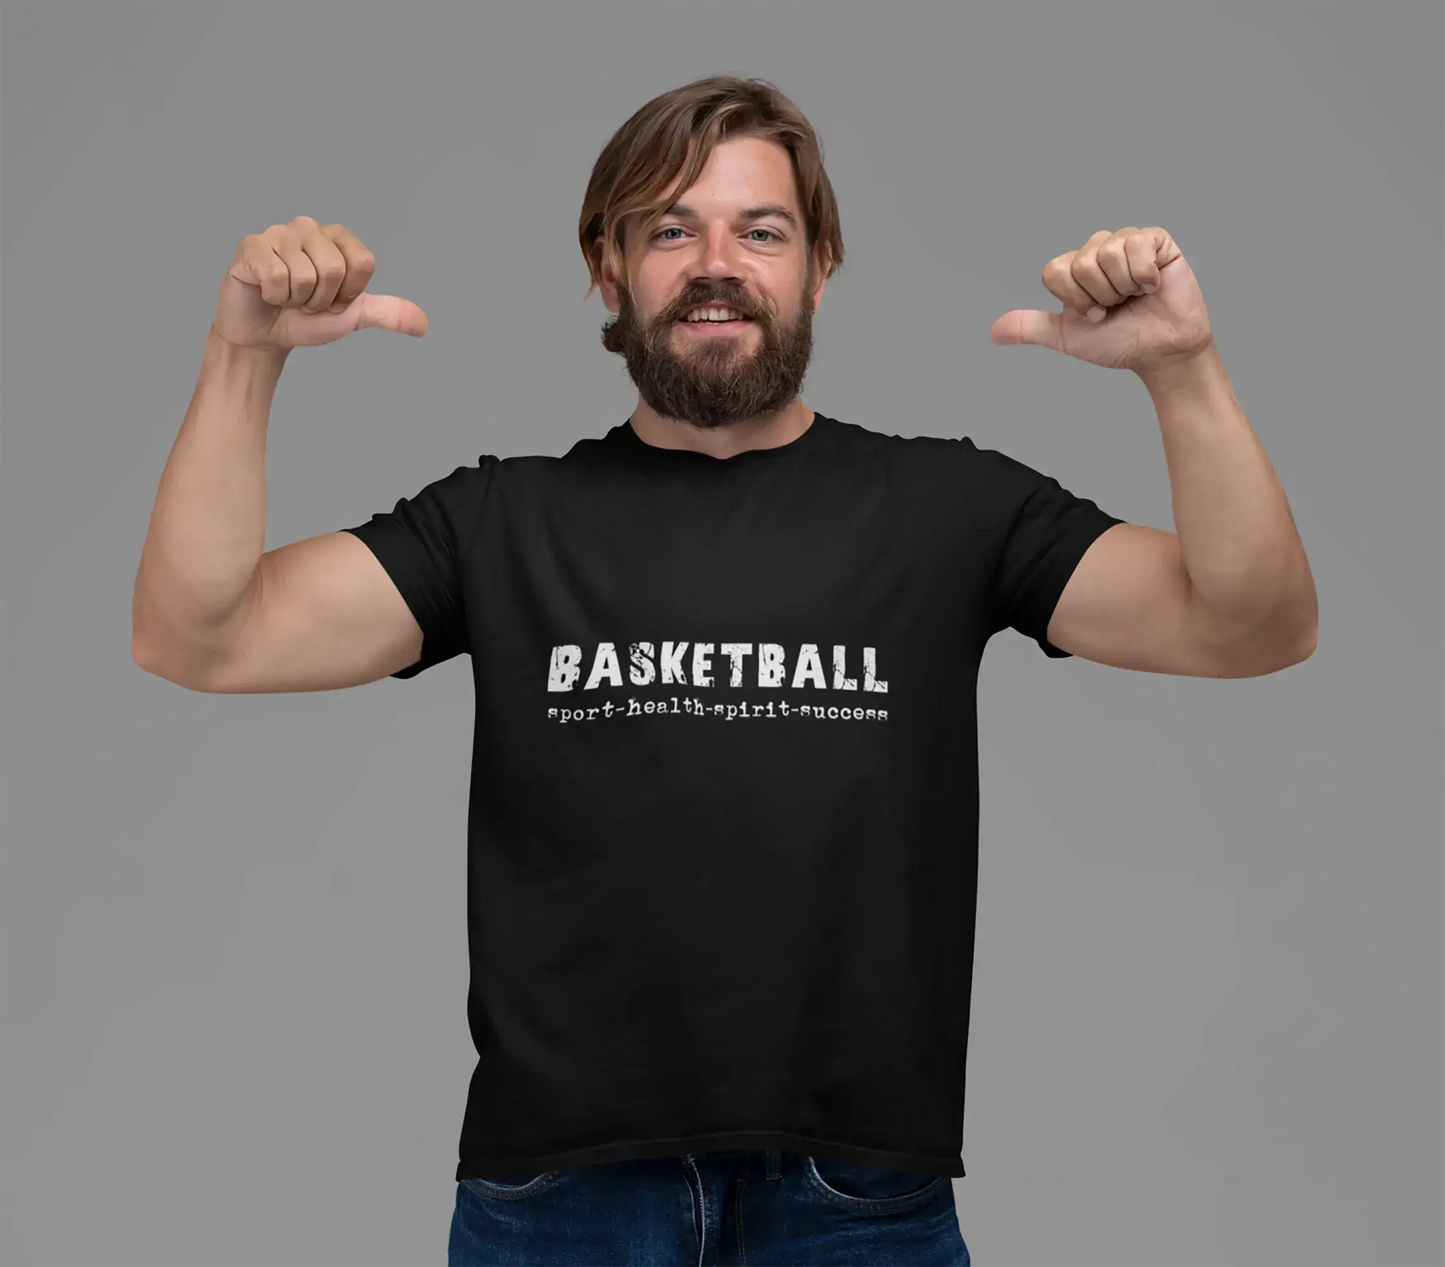 basketball sport-health-spirit-success Men's Short Sleeve Round Neck T-shirt 00079